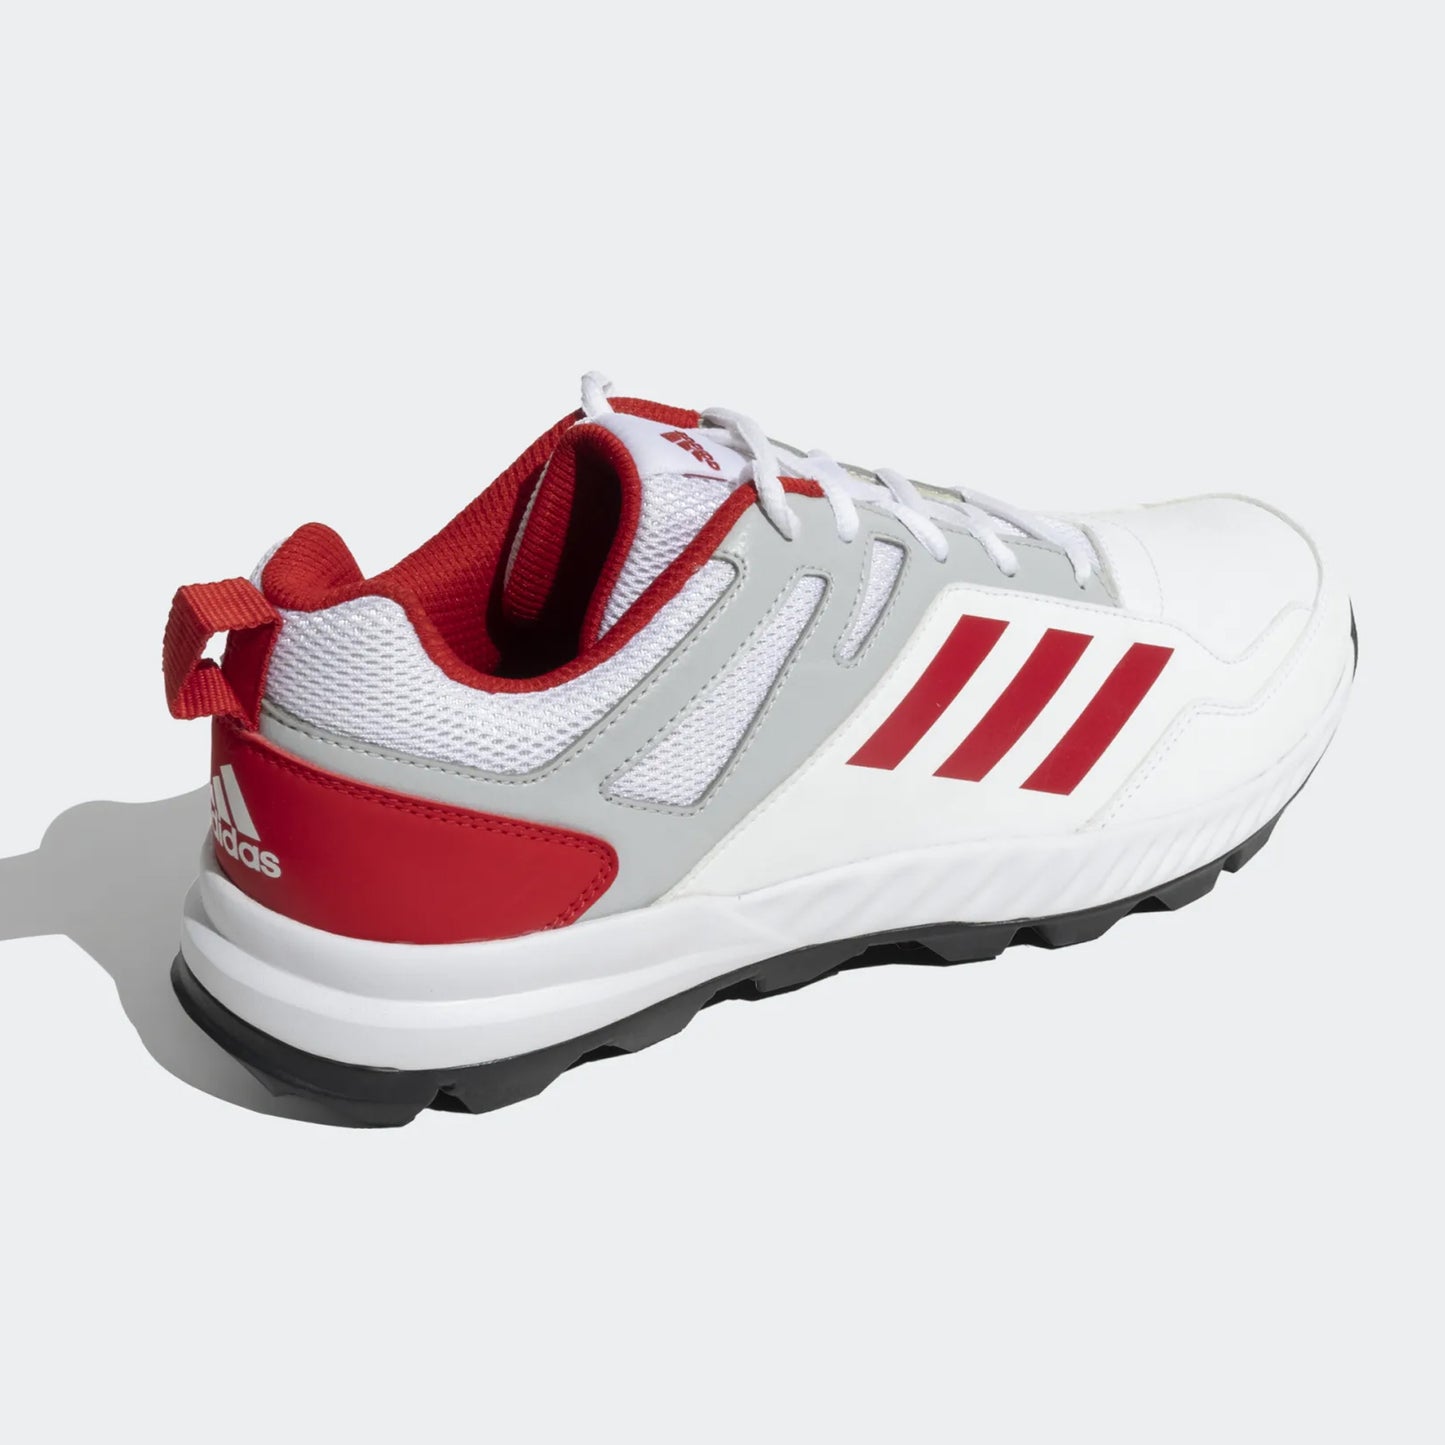 Adidas Cririse V2 Men's Cricket Shoes - Best Price online Prokicksports.com